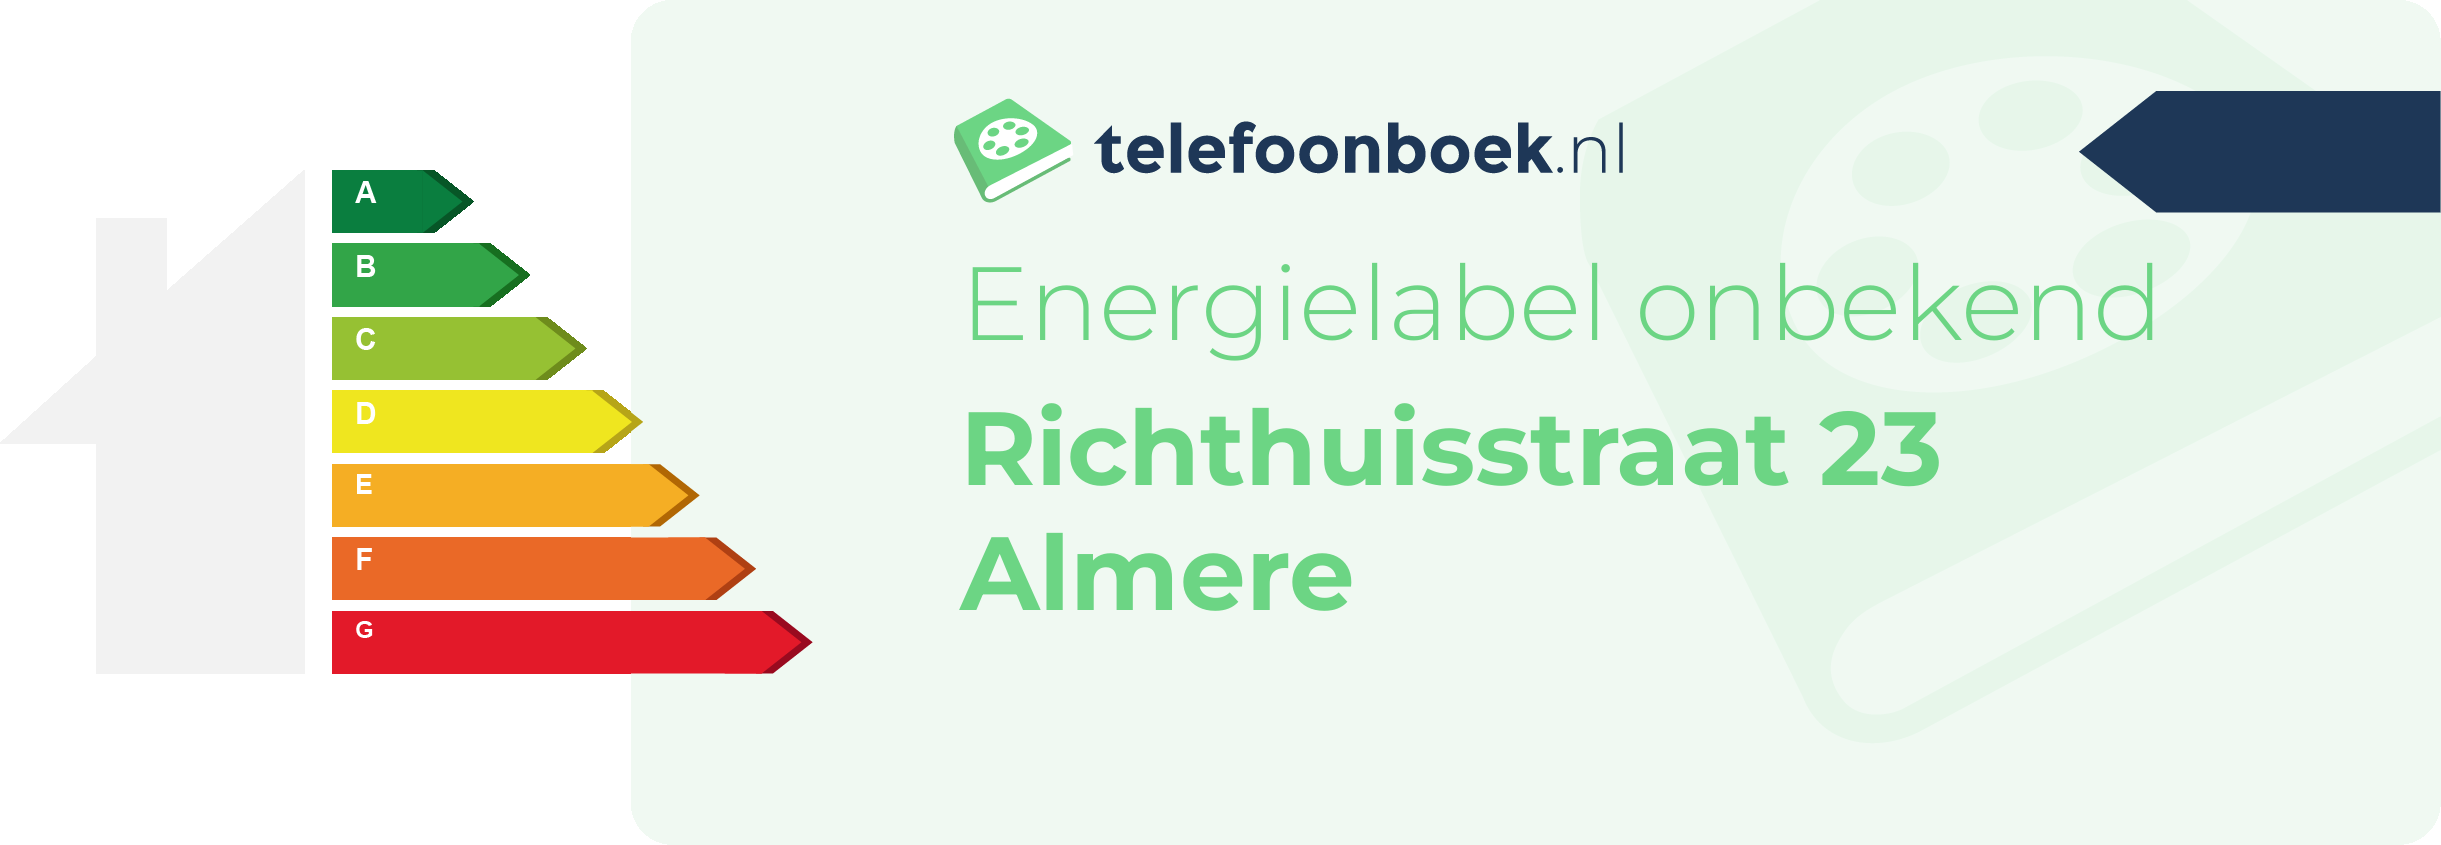 Energielabel Richthuisstraat 23 Almere